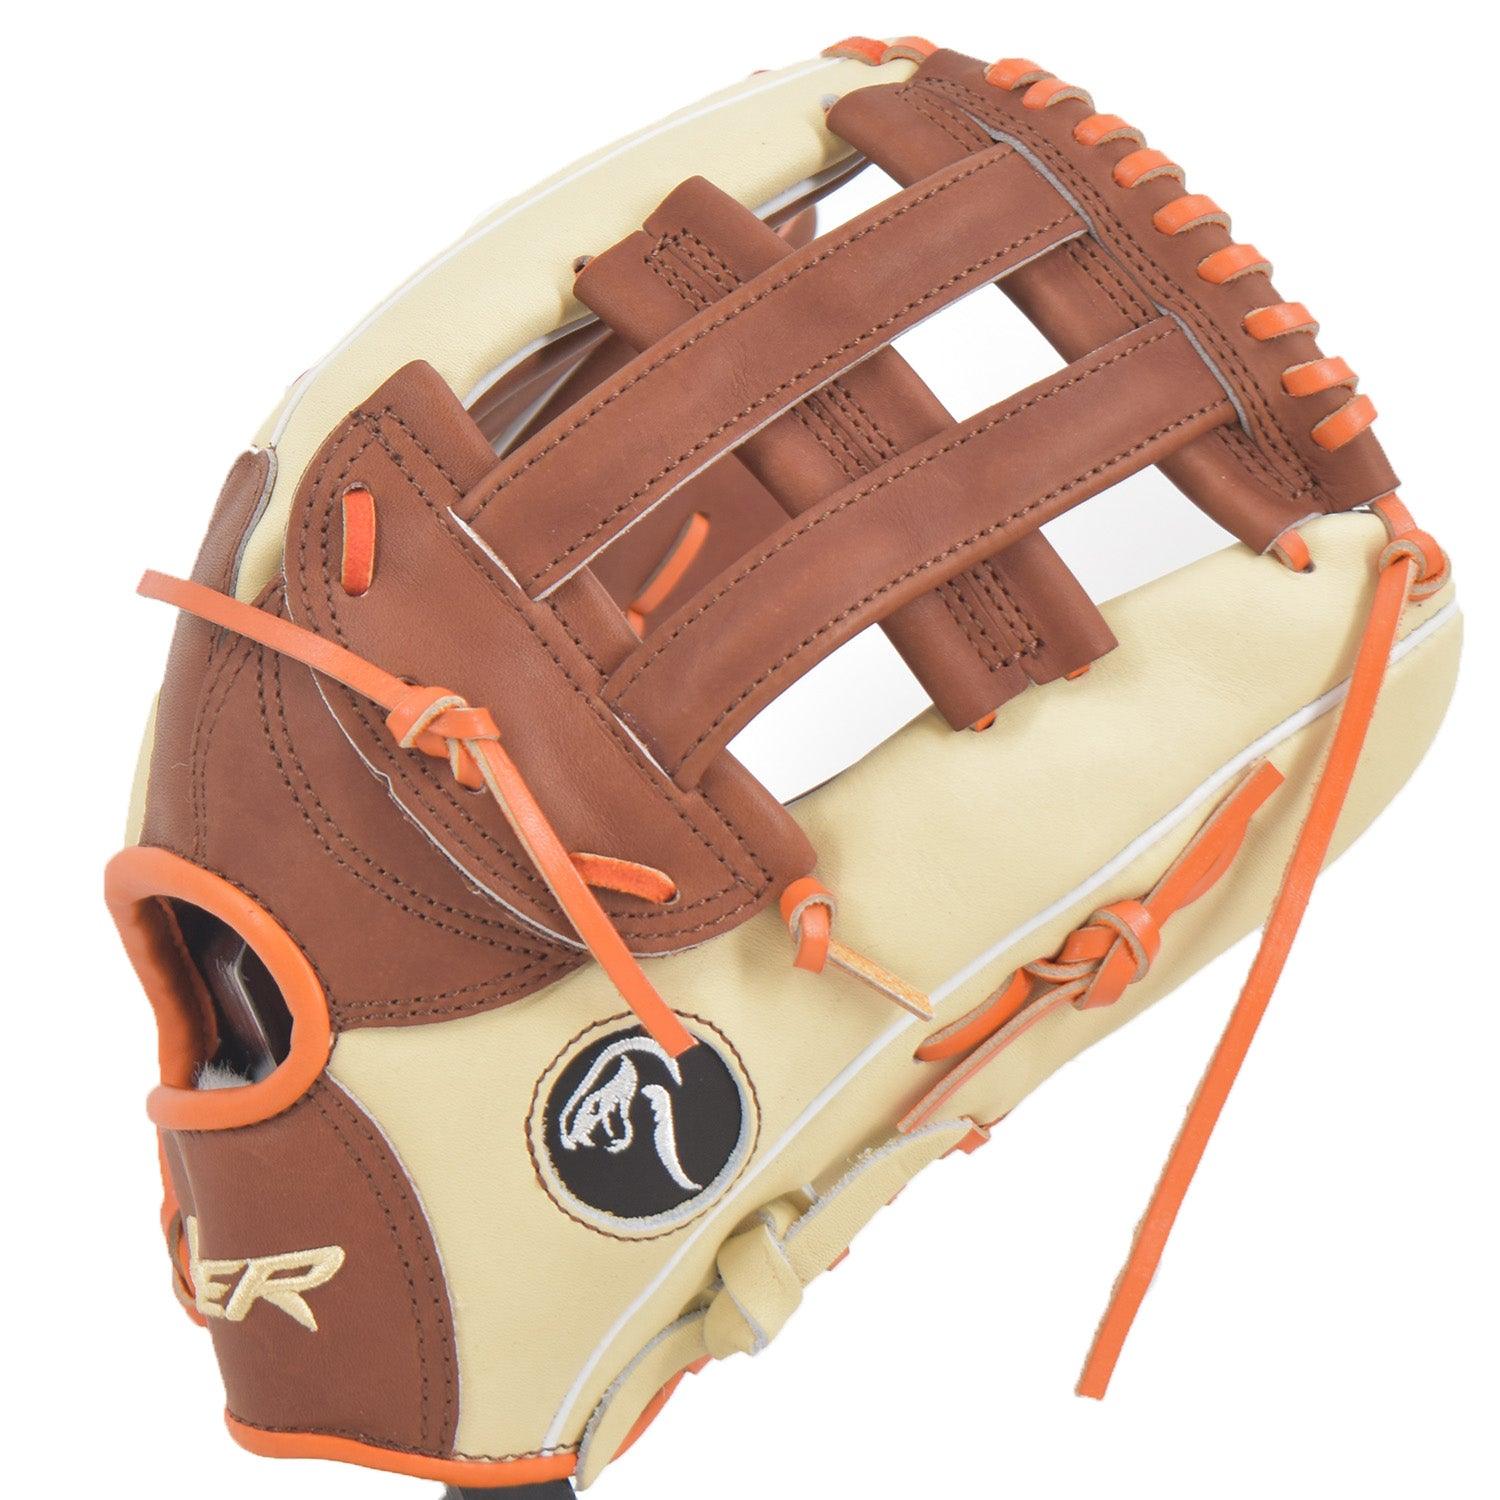 Viper Japanese Kip Leather Slowpitch Softball Fielding Glove Carmel Tan Orange - Smash It Sports